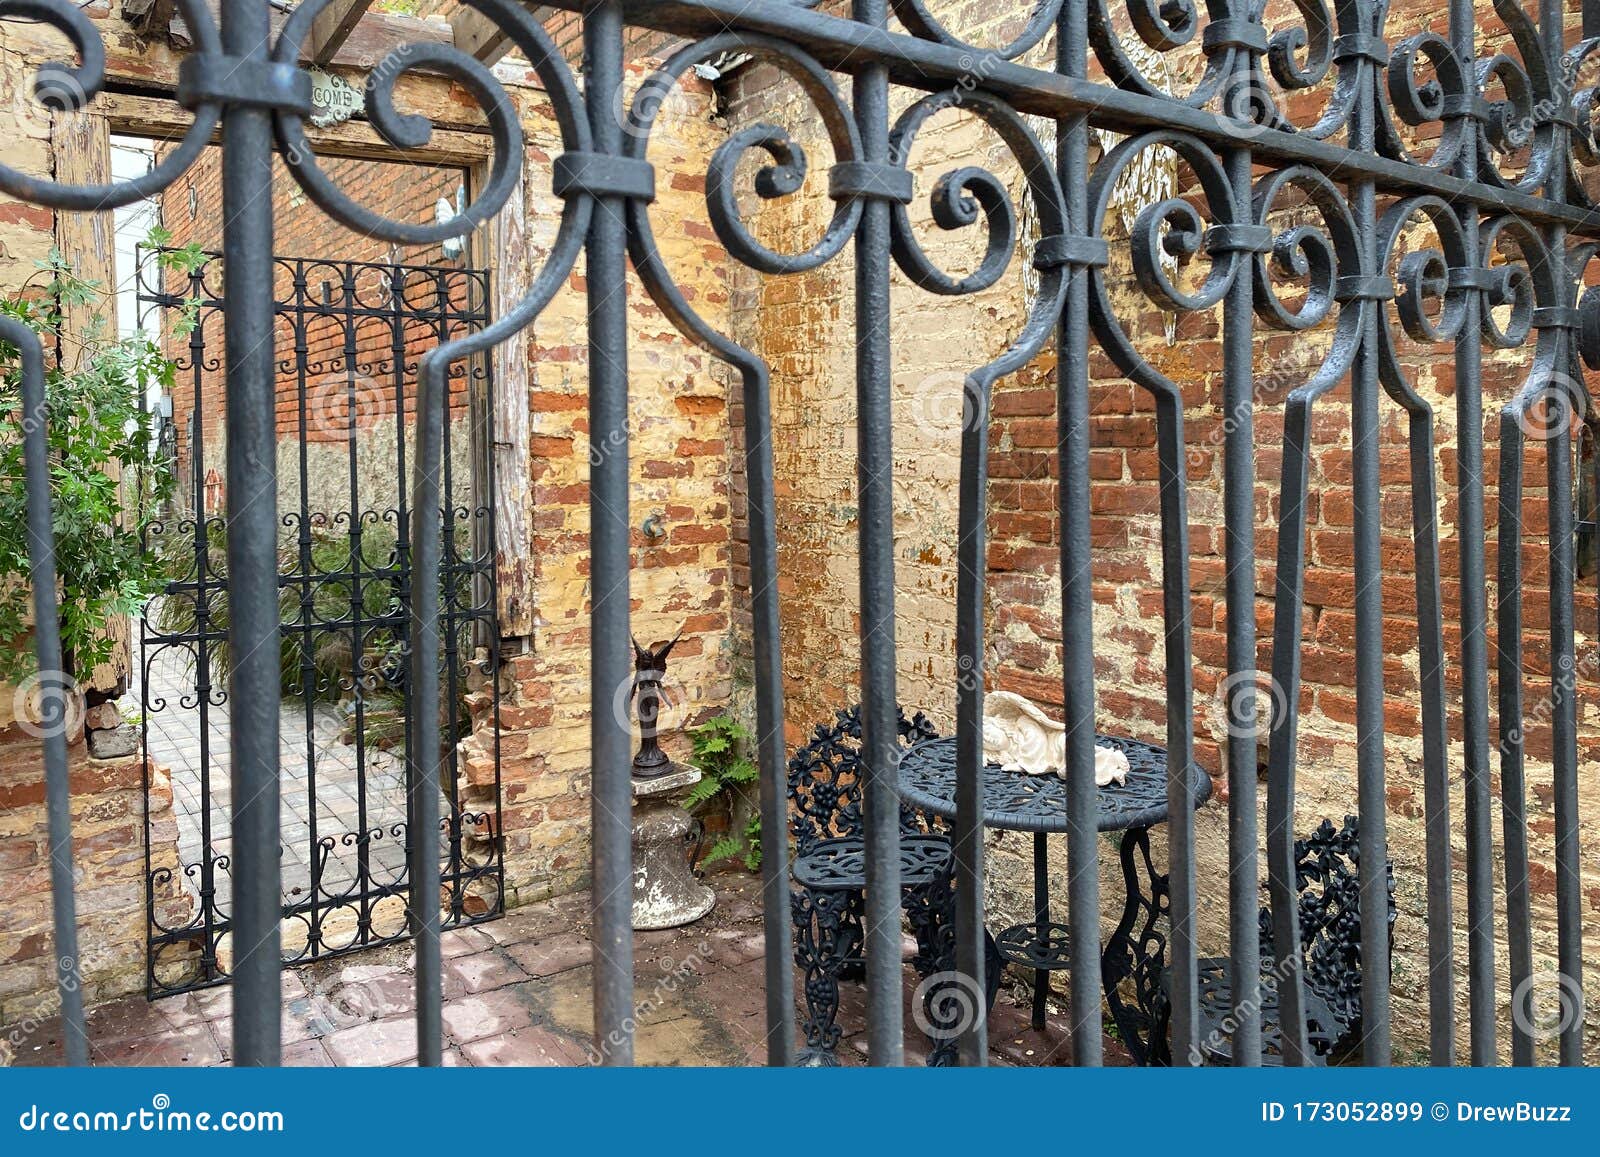 View through Wrought Iron Gate Garden Sanctuary Stock Image - Image of ...